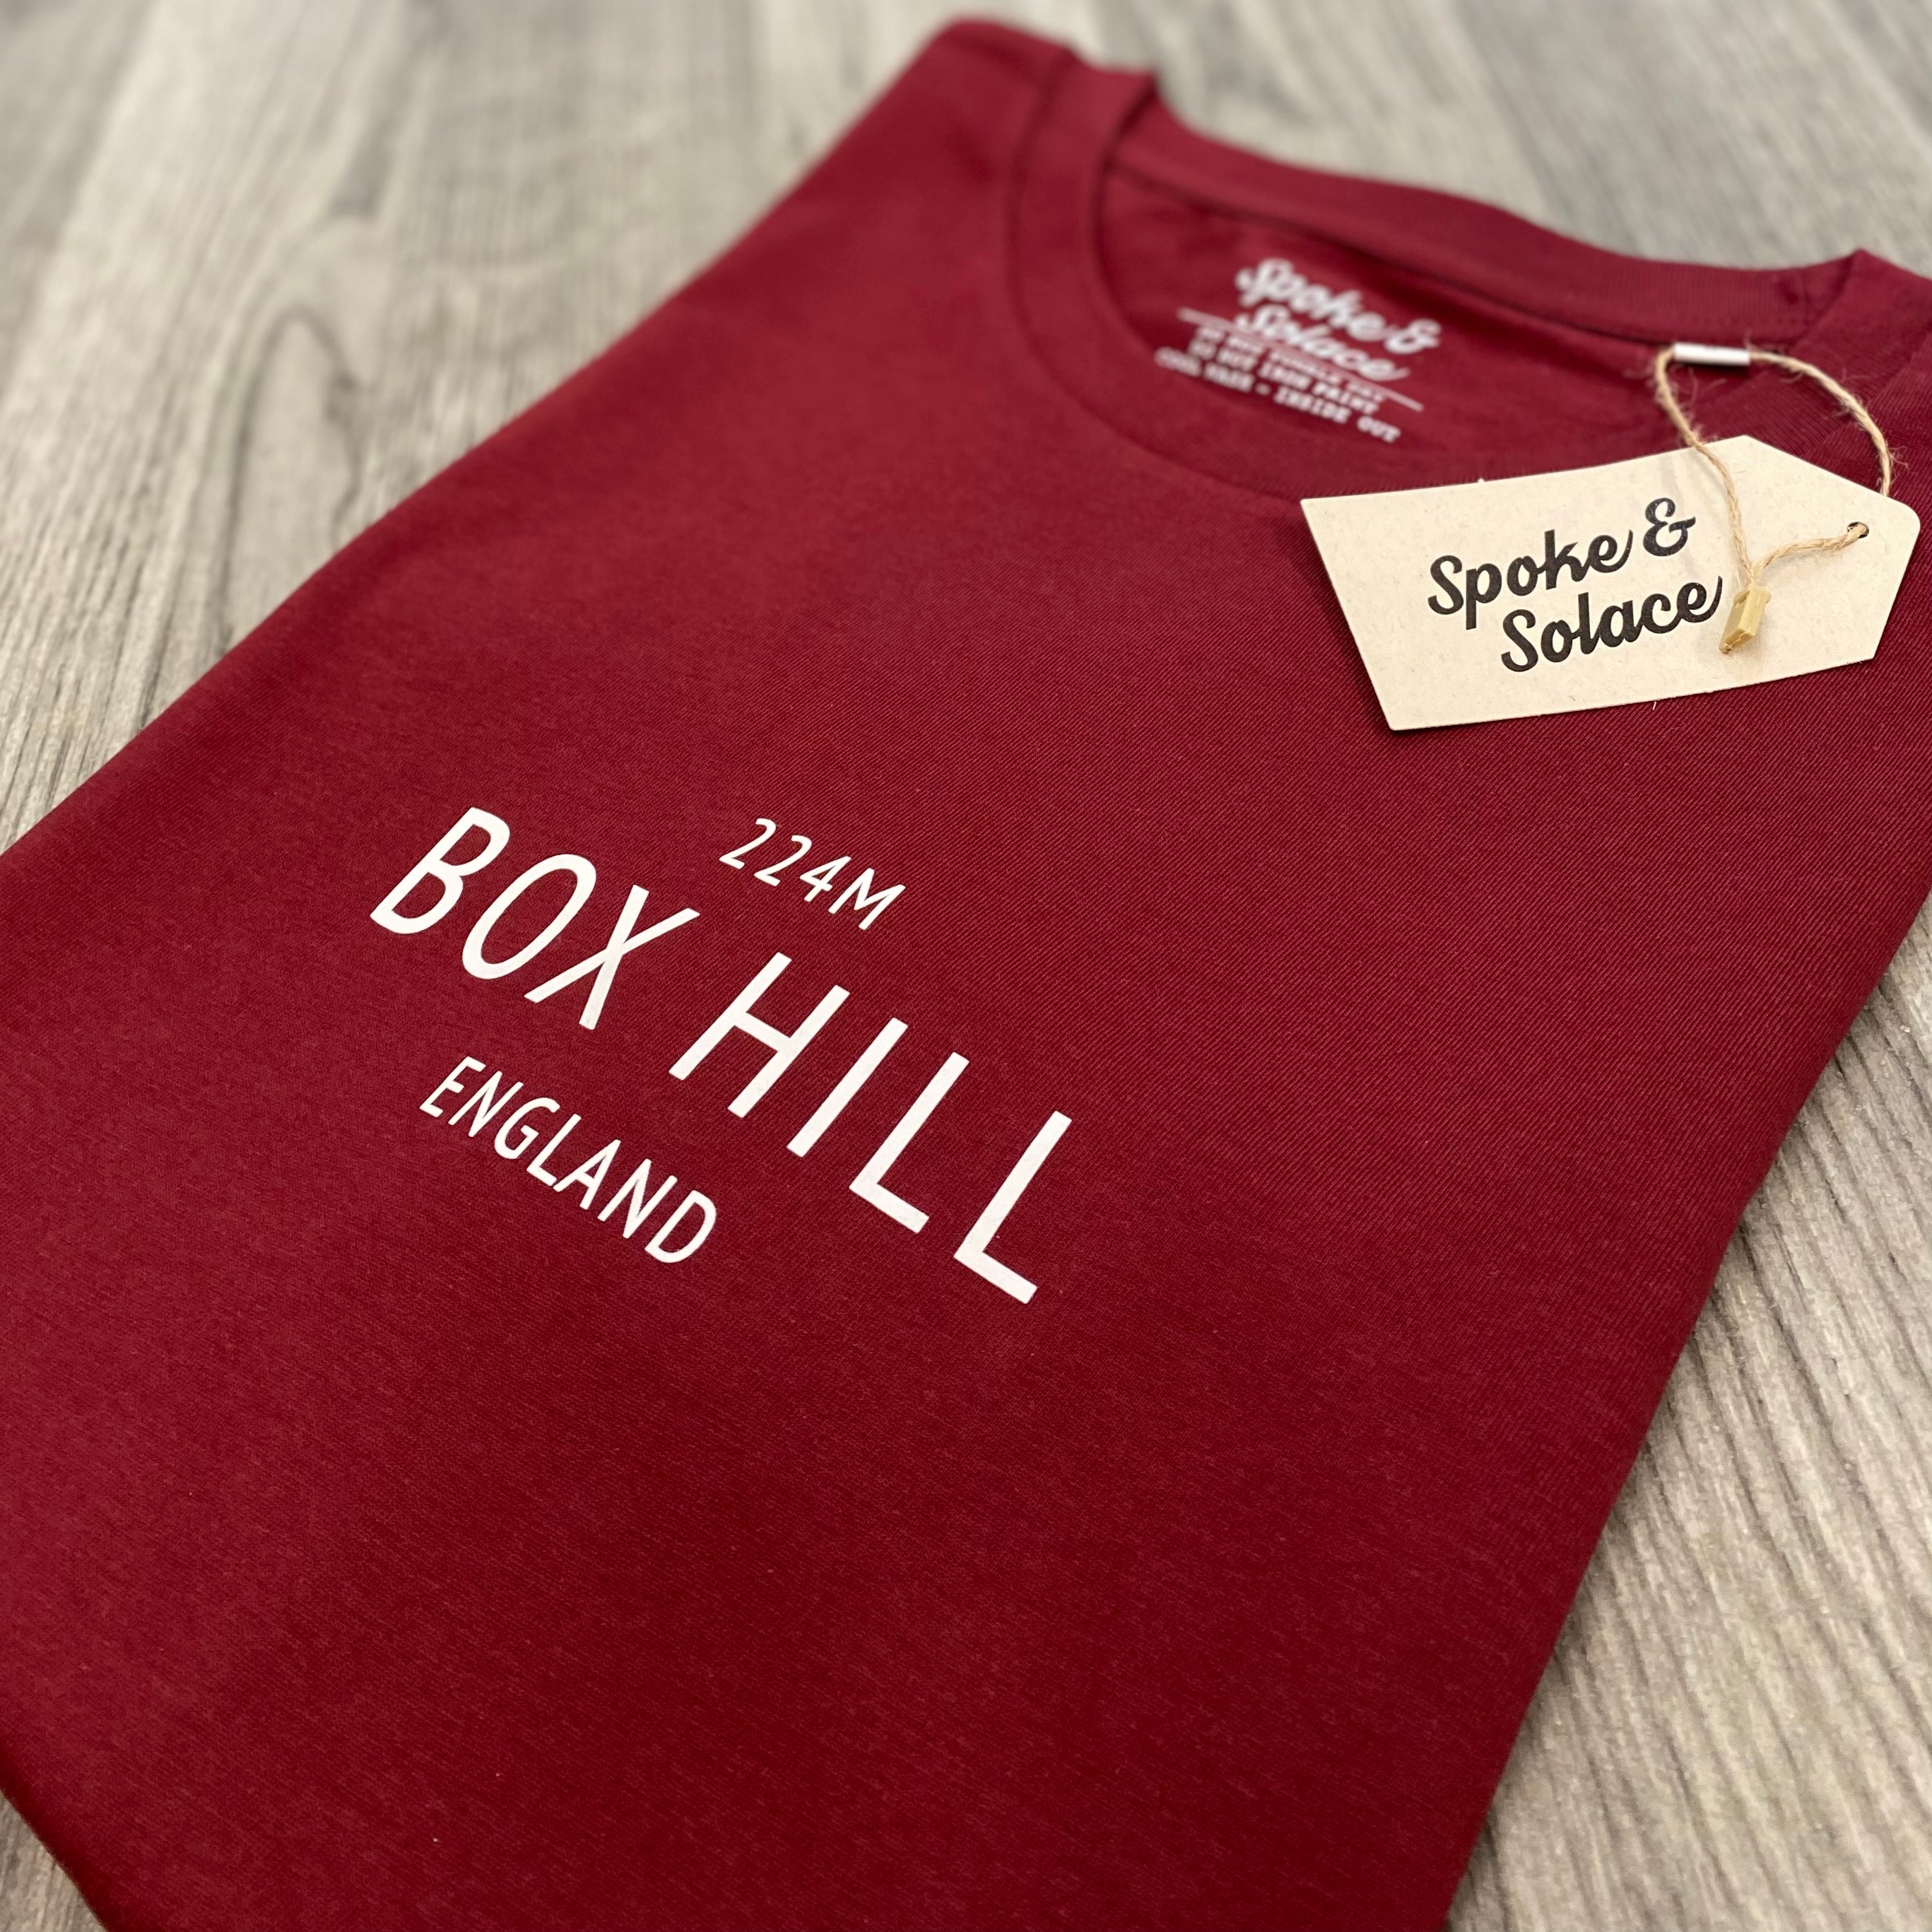 Box Hill T-Shirt - Spoke & Solace